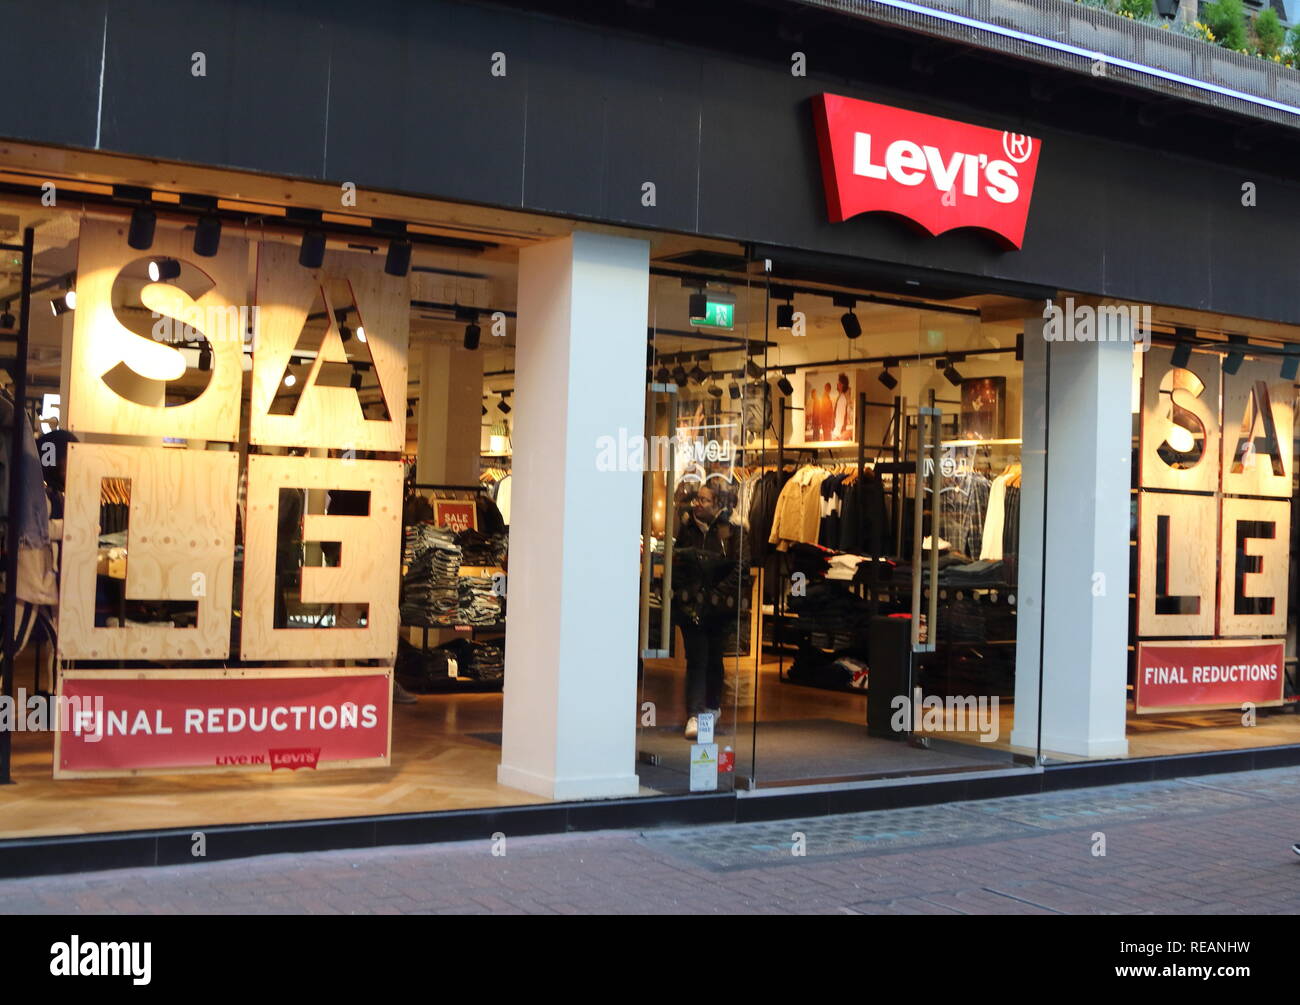 Levi's brand logo seen in Carnaby Street in London, UK Stock Photo - Alamy